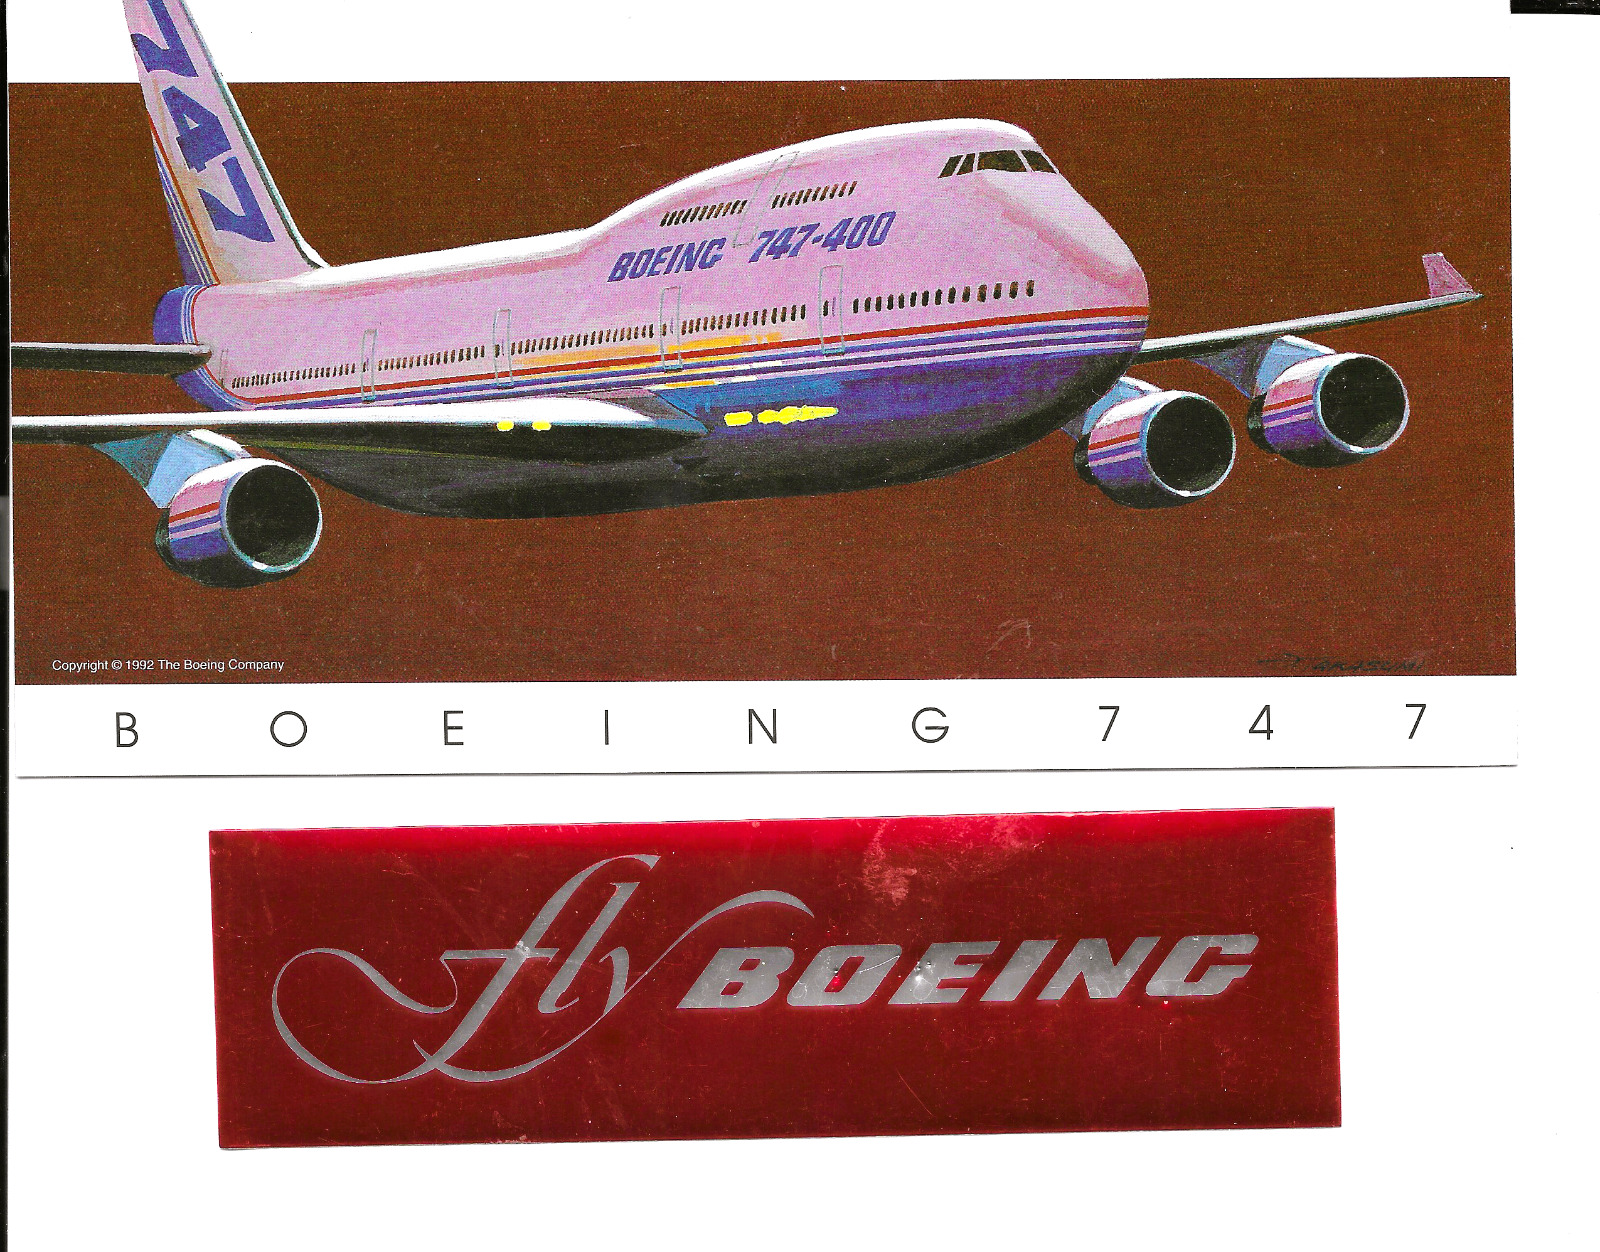 Boeing issued 747-400 Large 8in Sticker & Fly Boeing Sticker